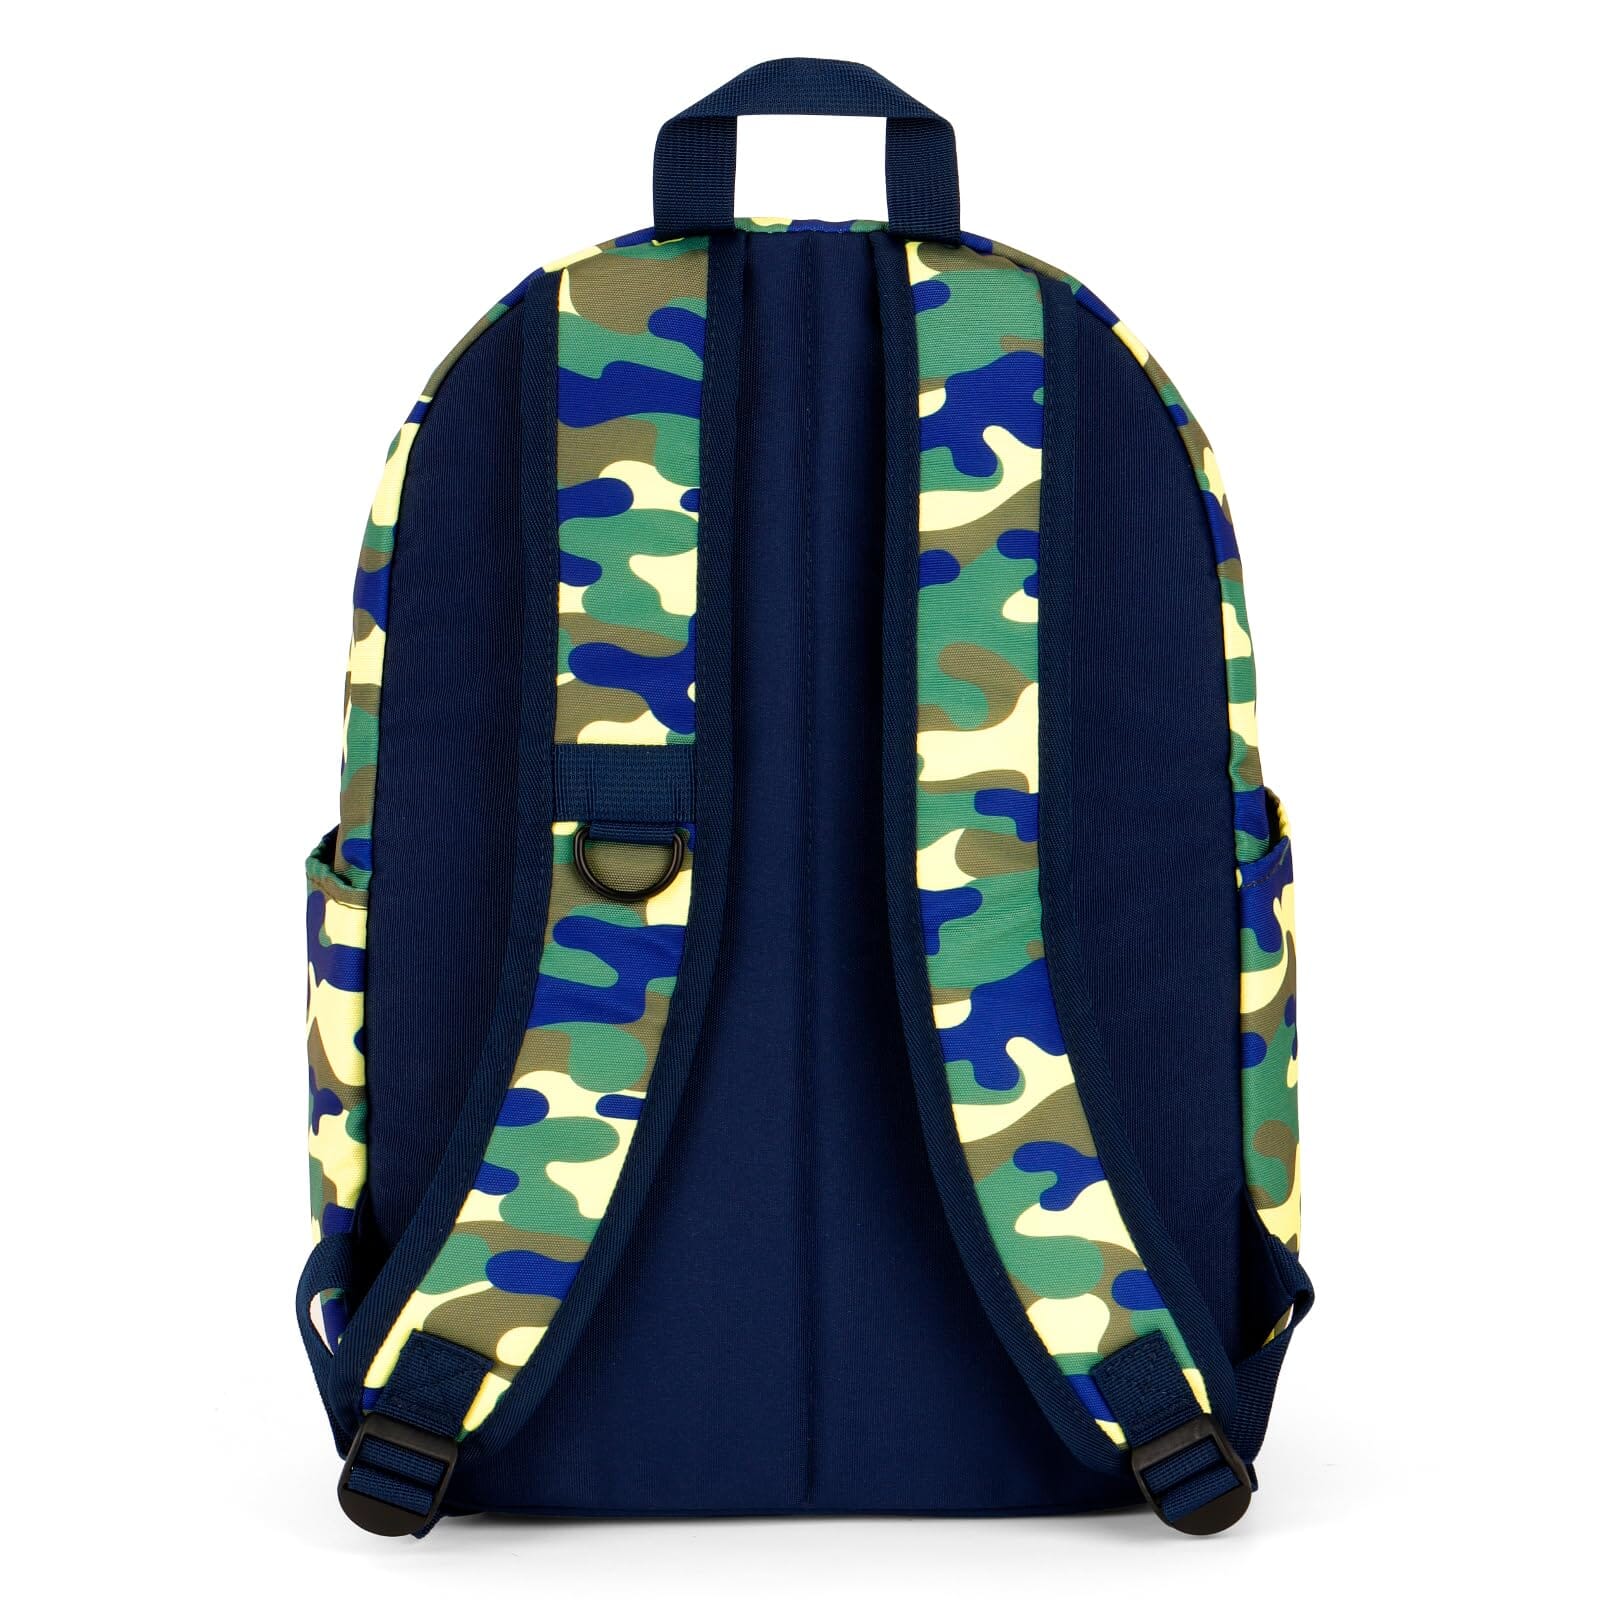 Choco Mocha Camouflage Backpack for Boys Travel School Backpack 17 Inch, Yellow Green chocomochakids 